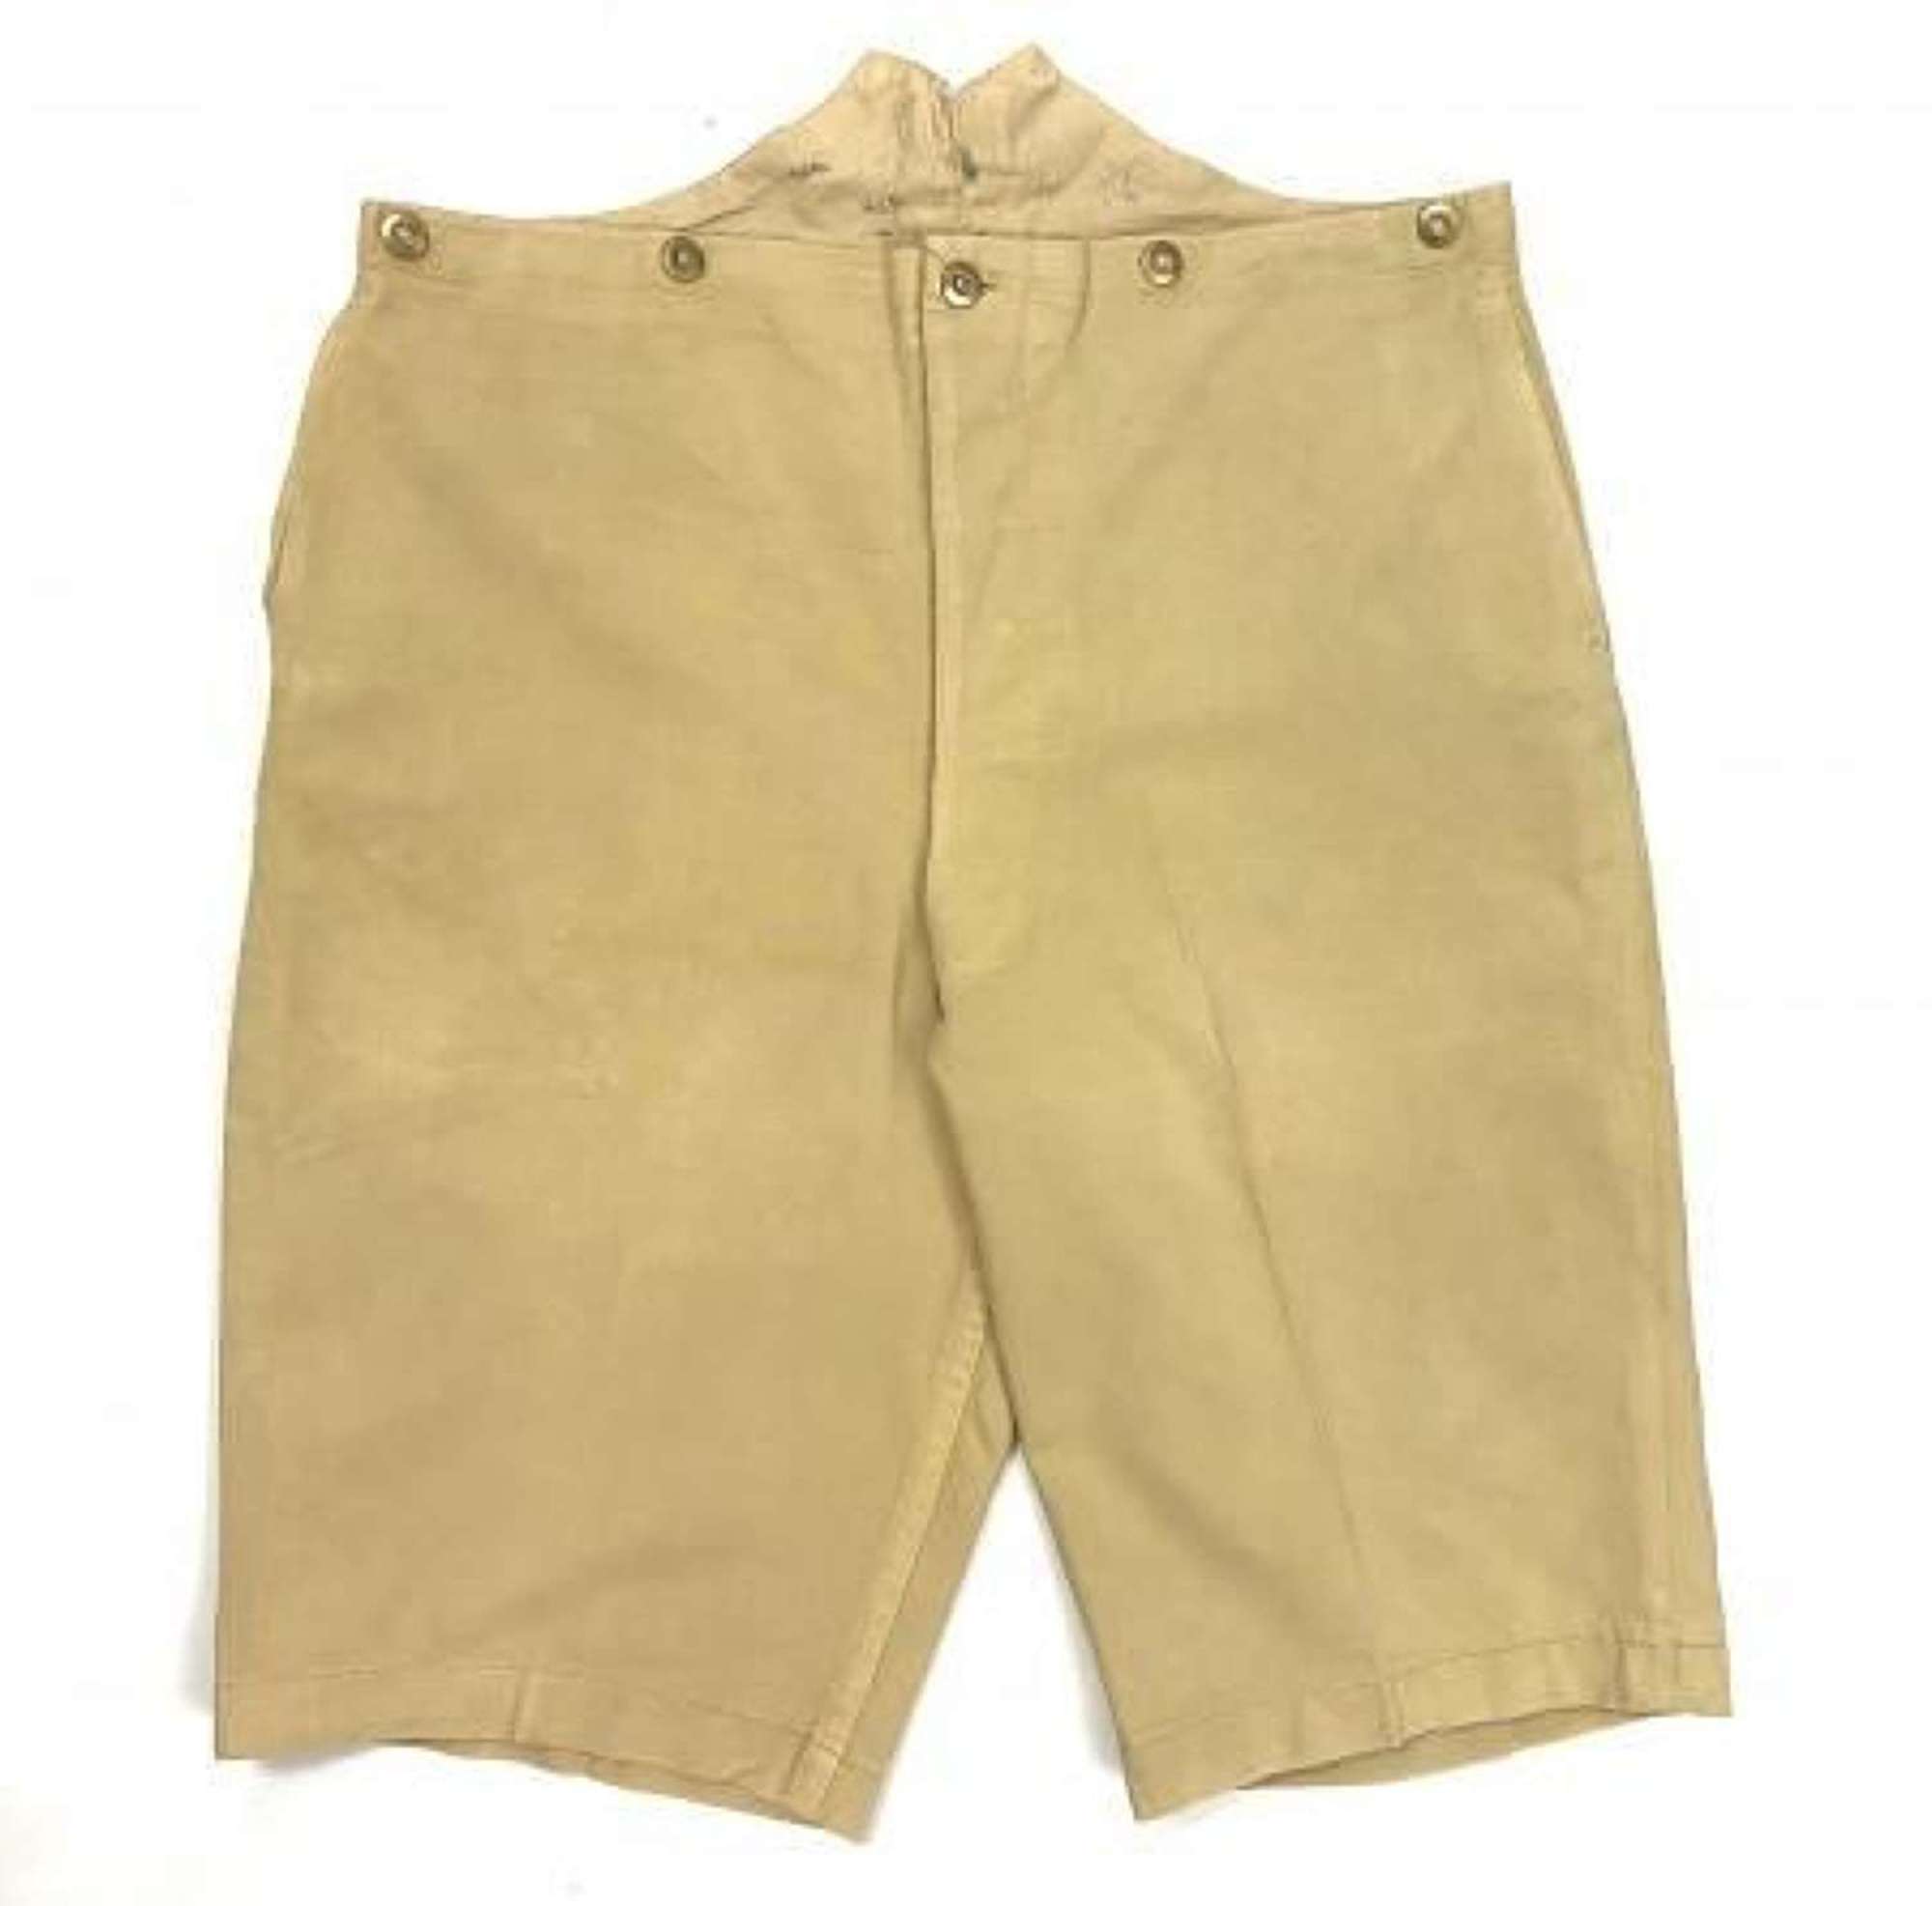 Rare Early British Khaki Drill Shorts